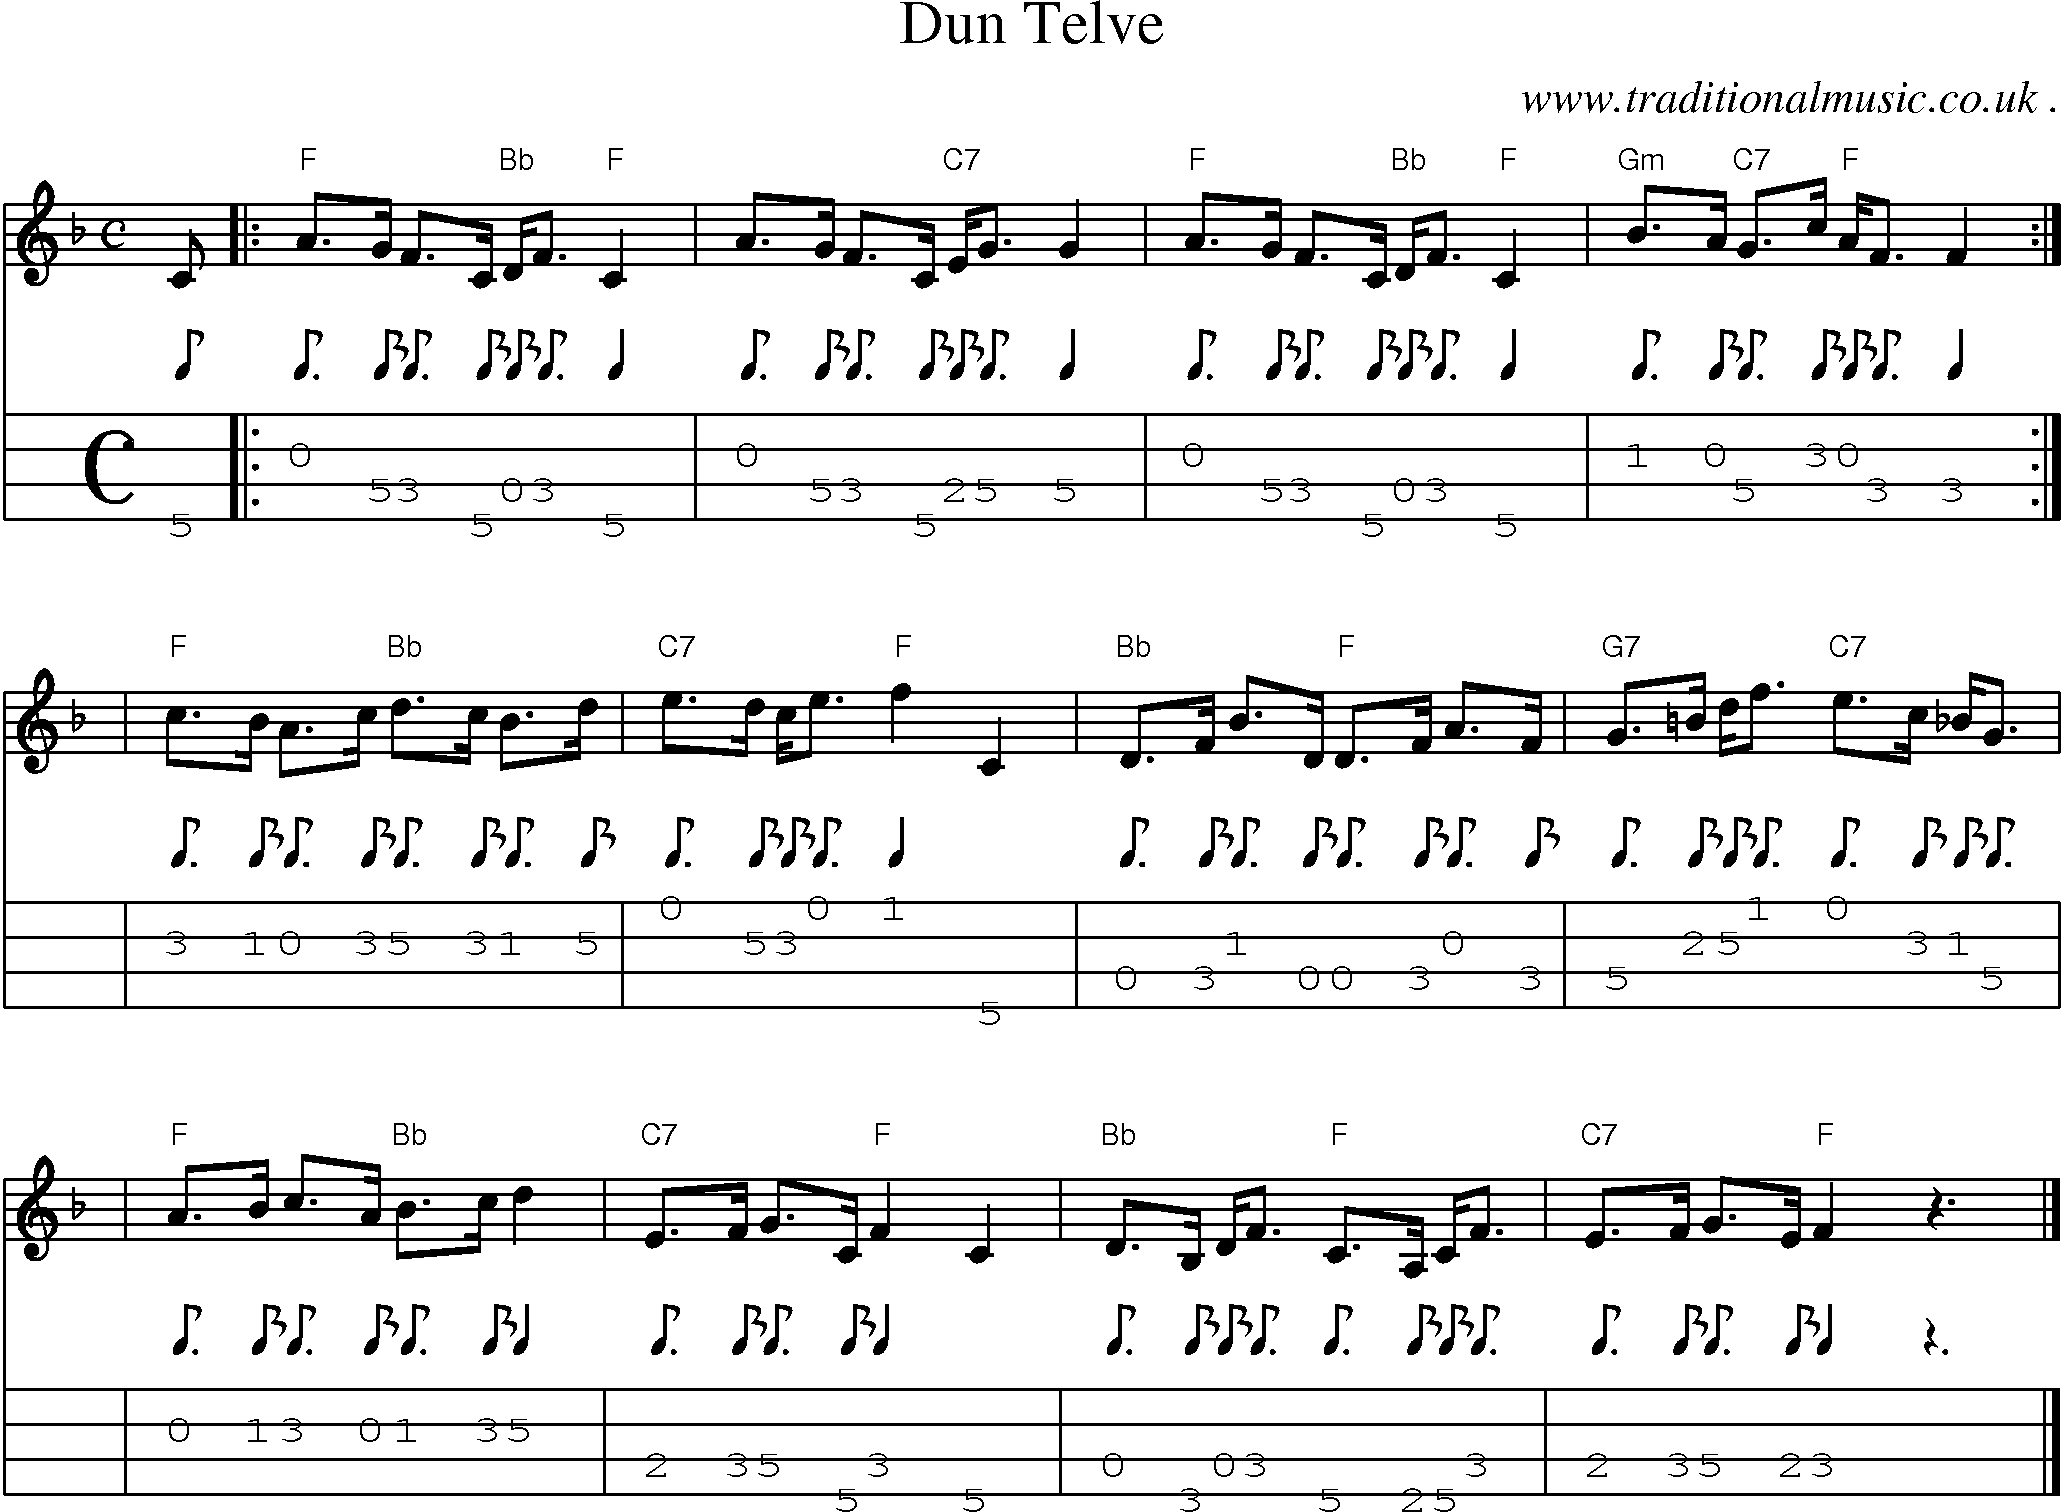 Sheet-music  score, Chords and Mandolin Tabs for Dun Telve